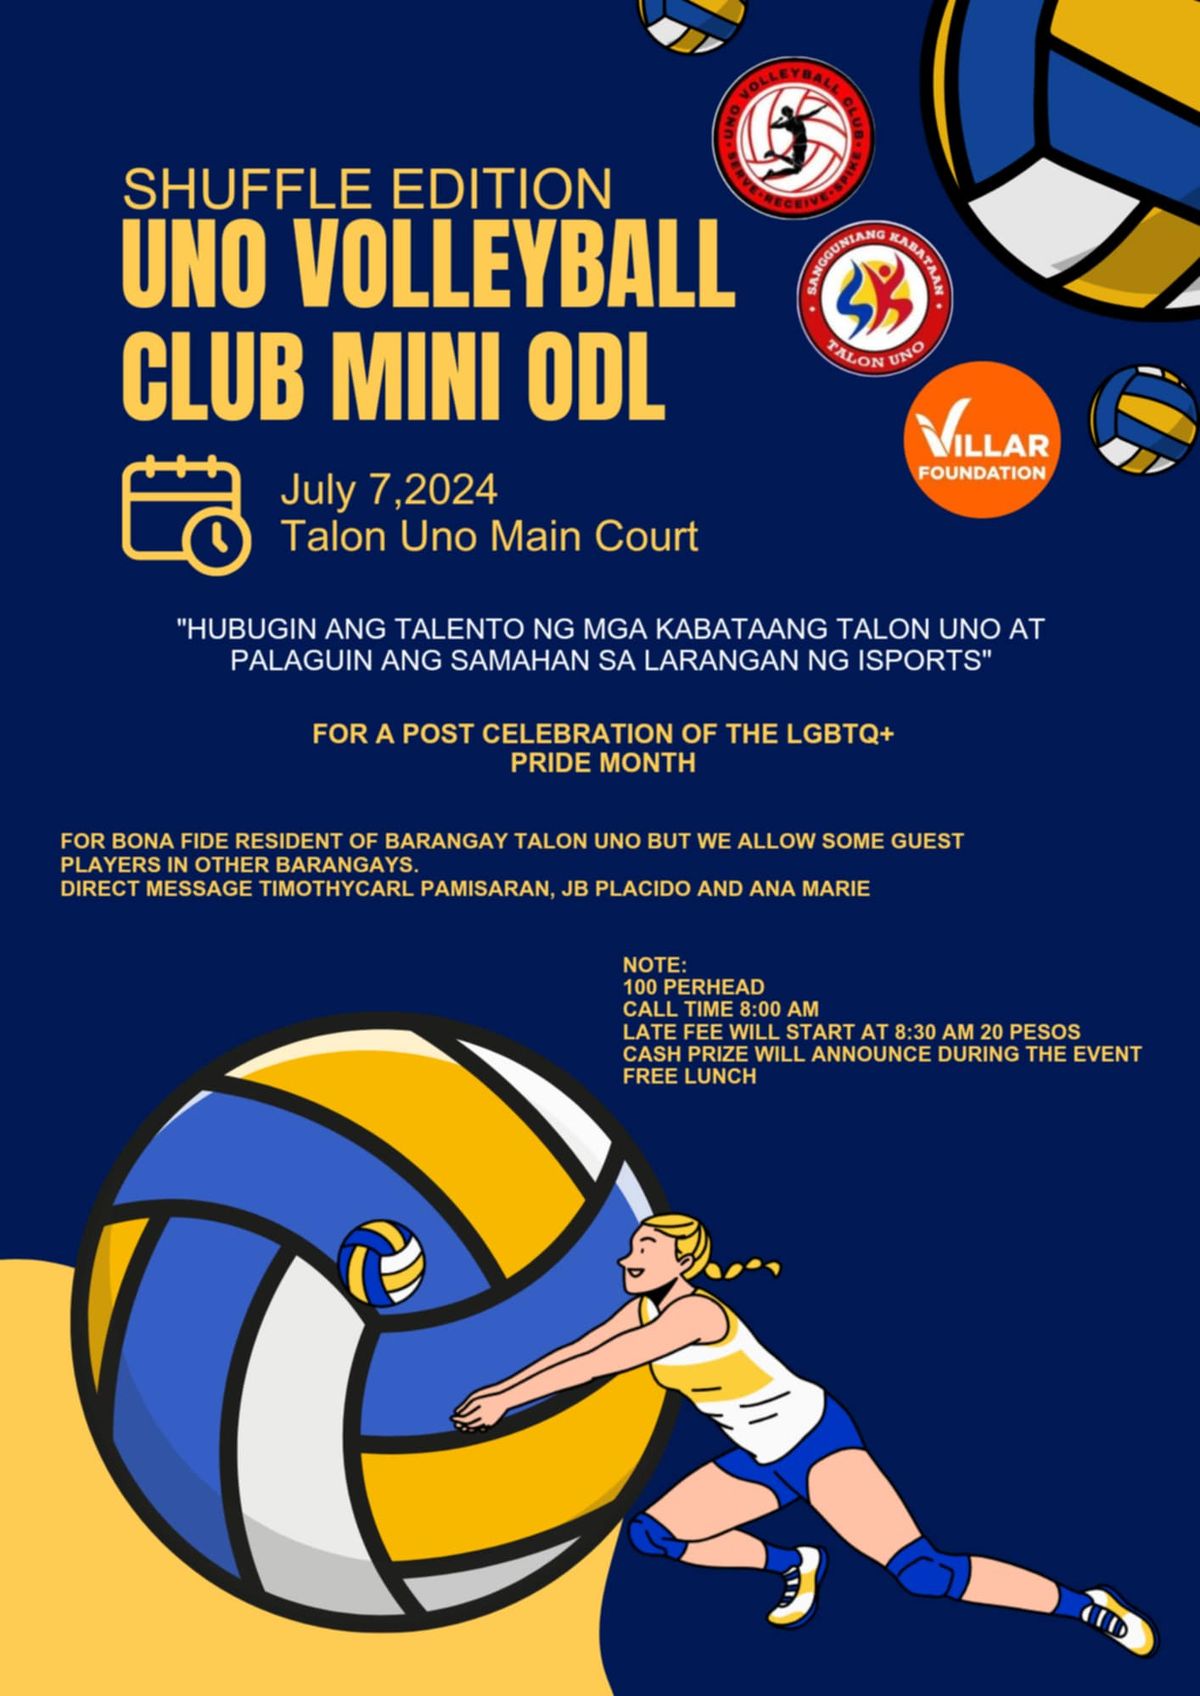 UNO Volleyball Club's MINI ODL